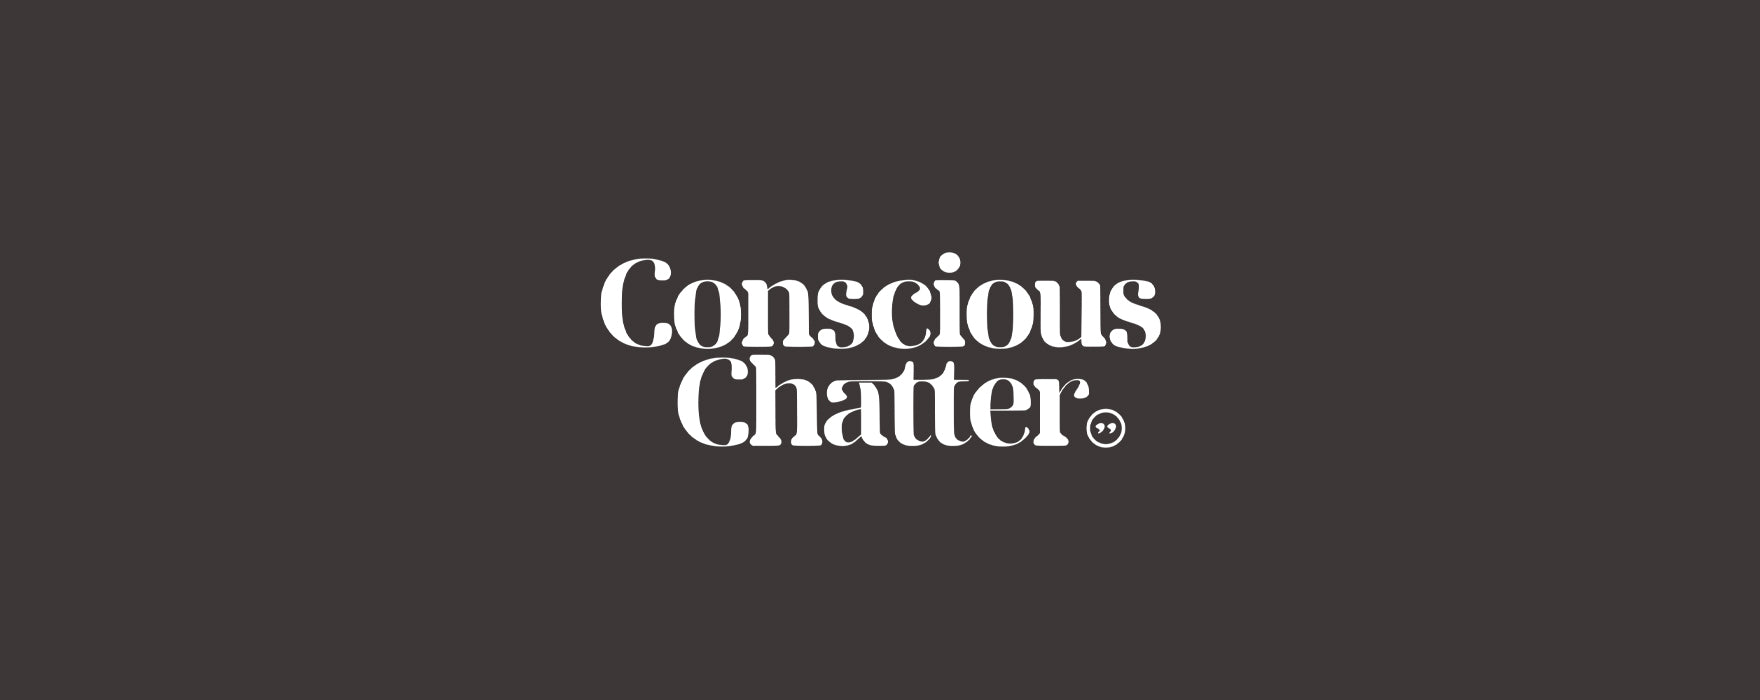 Conscious Chatter: MiaDonna Conflict-Free Diamonds